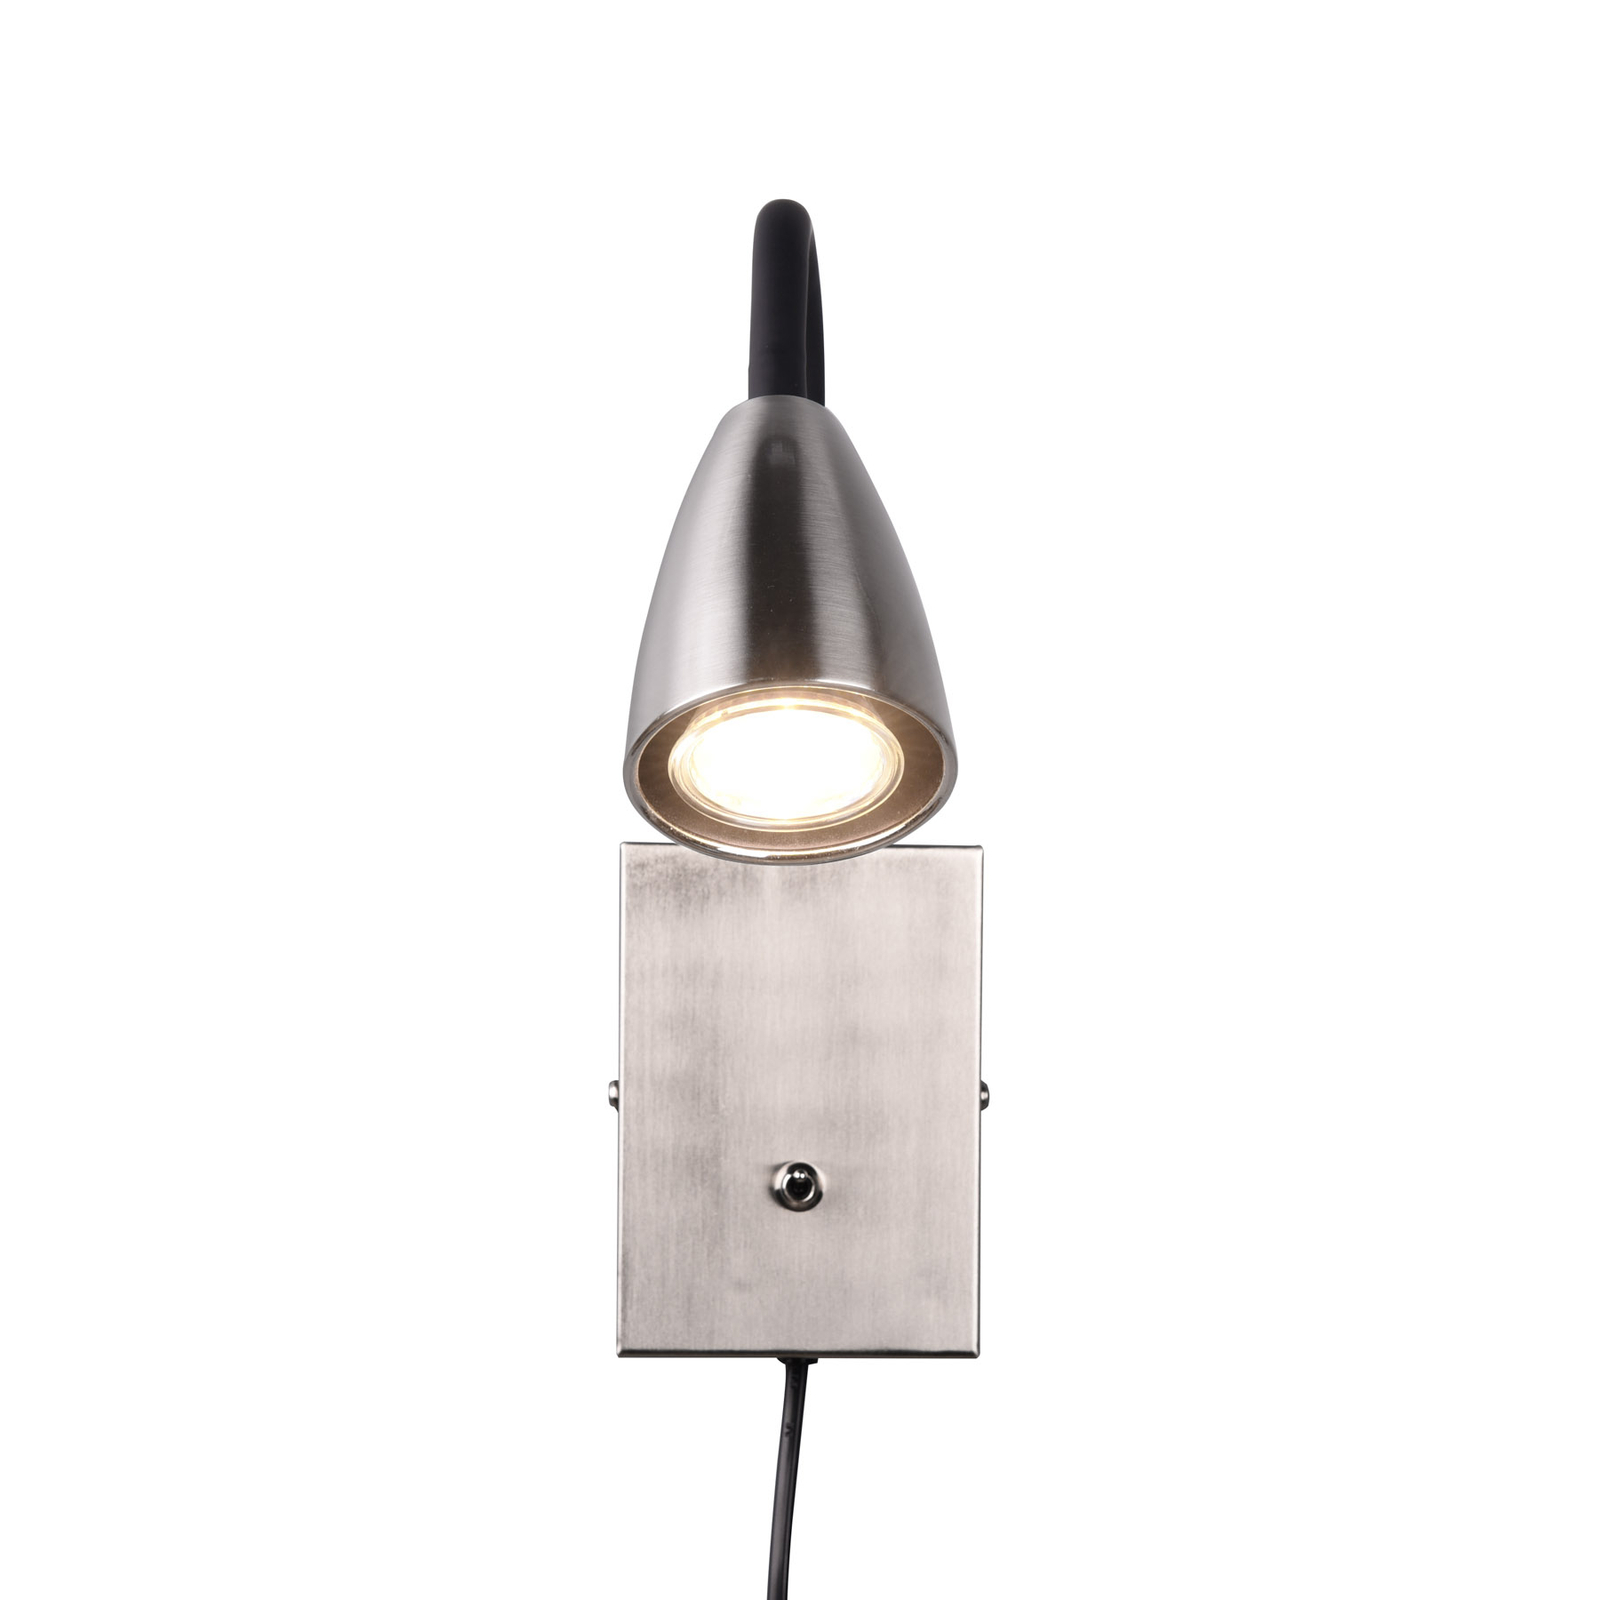 Wanda wall light with plug, matt nickel